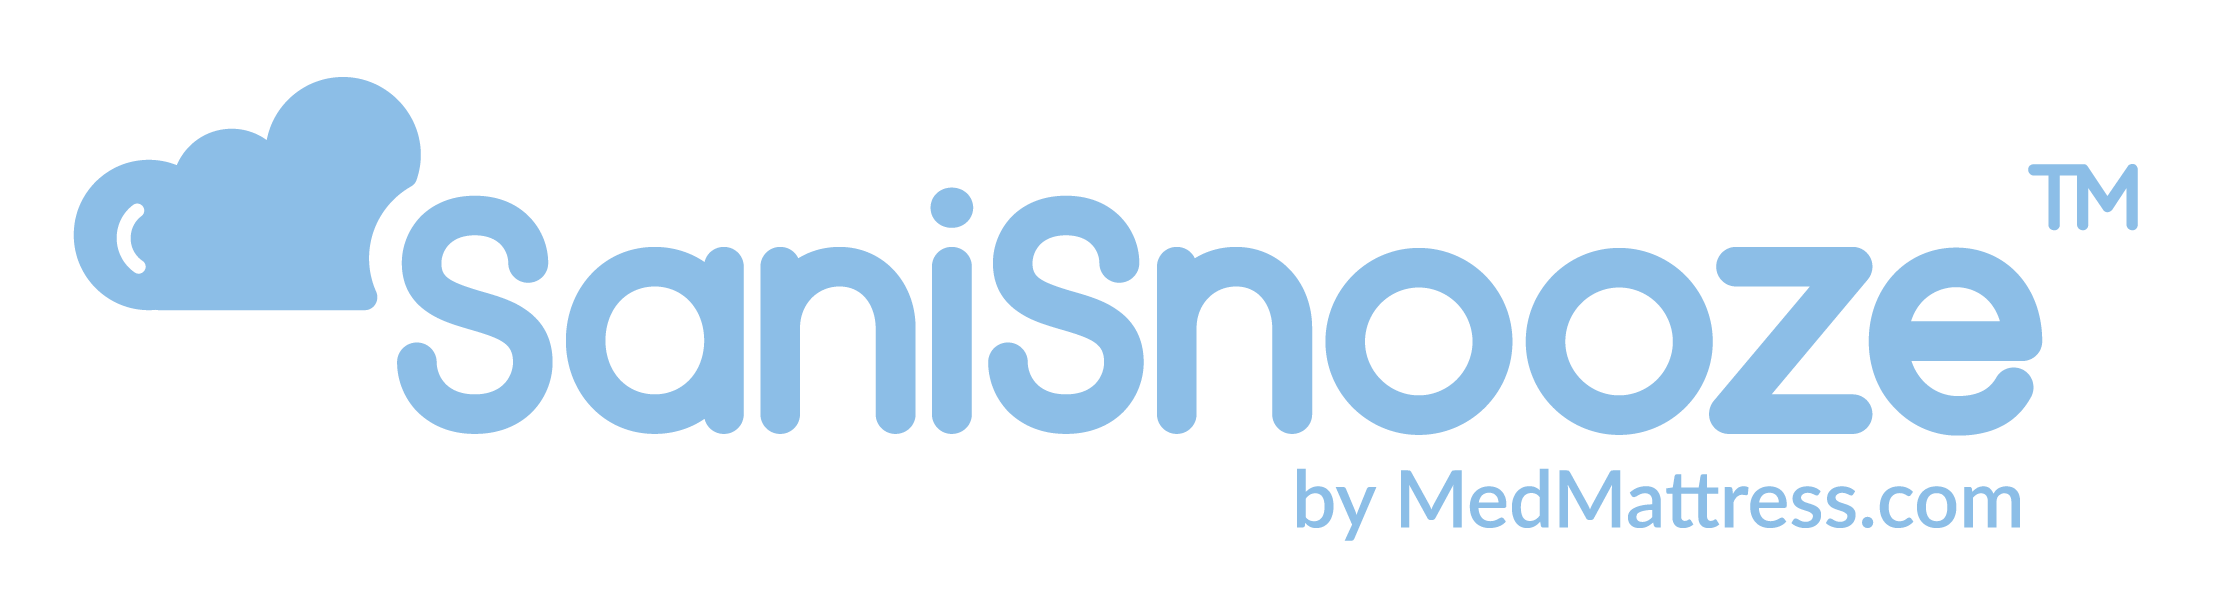 SaniSnooze logo blue